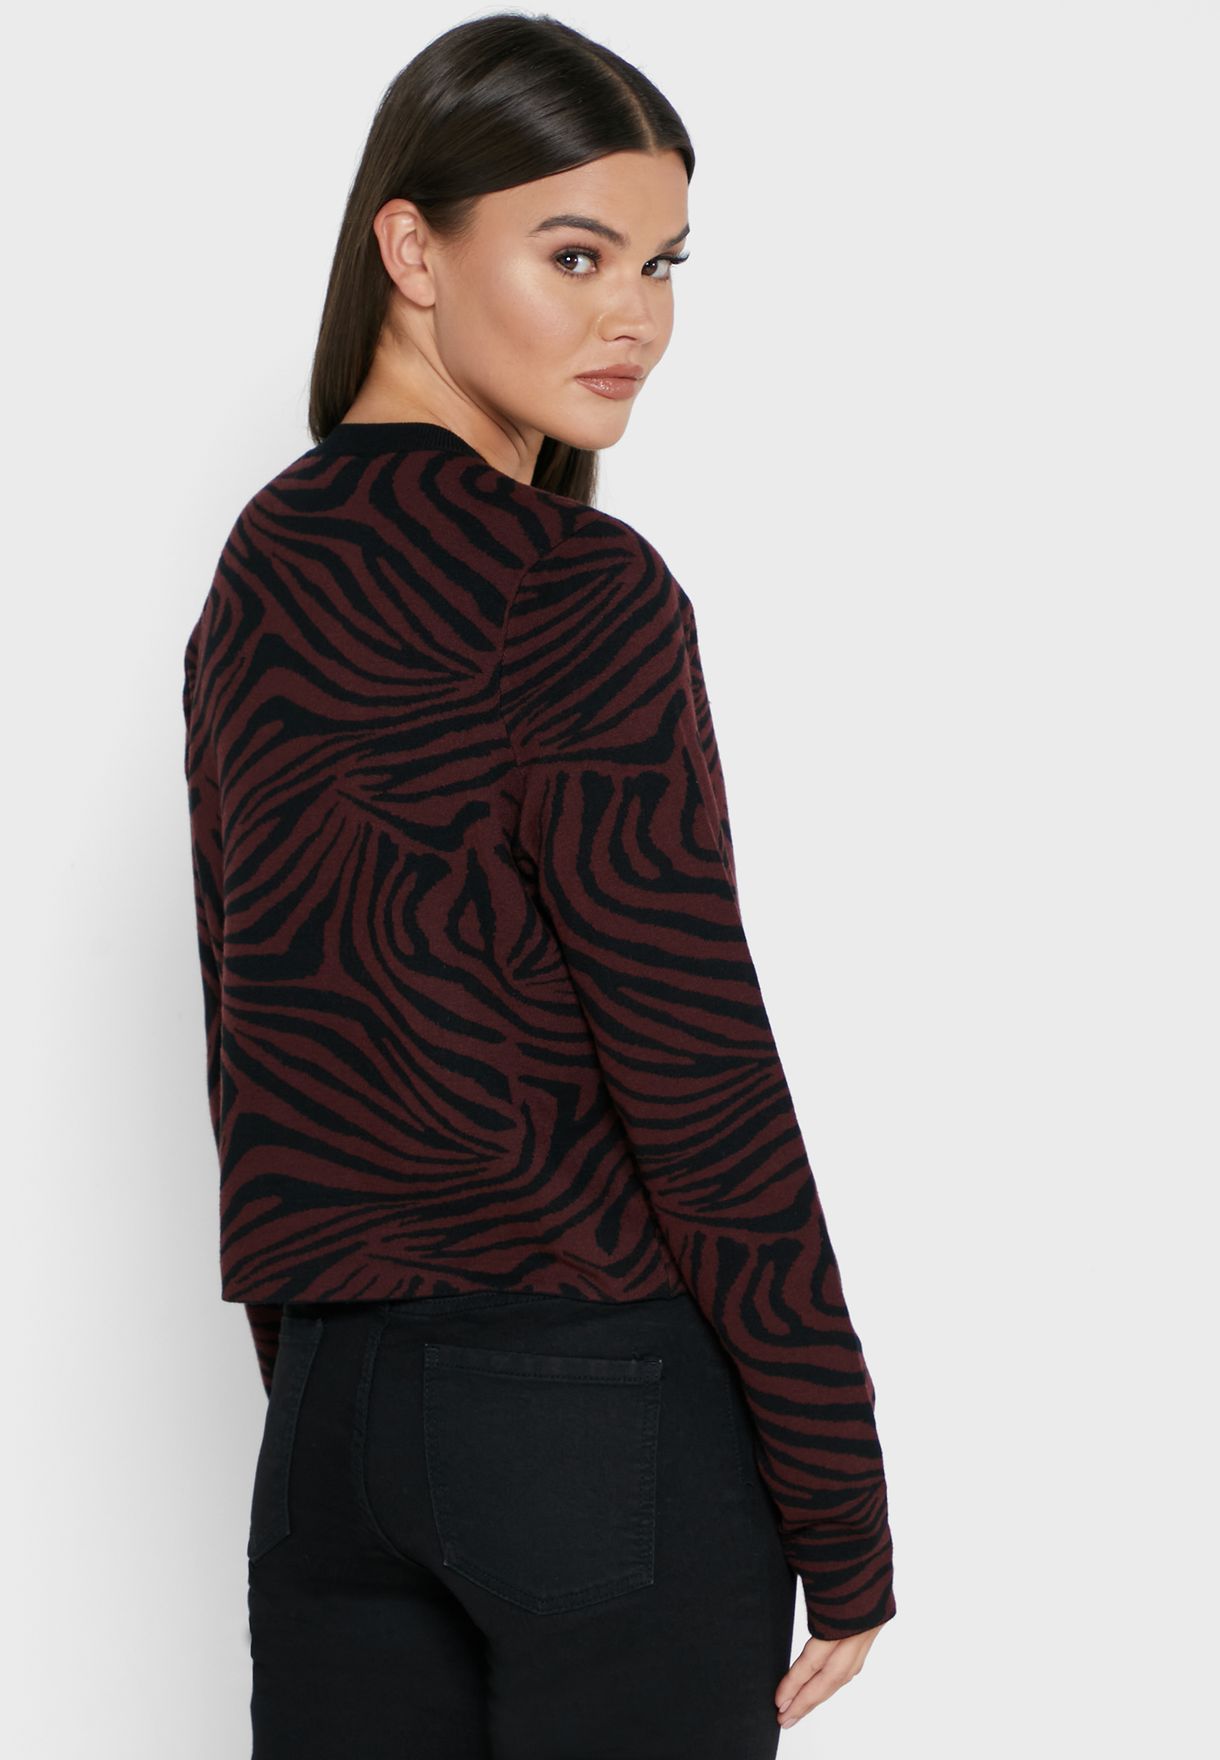 Martiy Jacquard Sweater